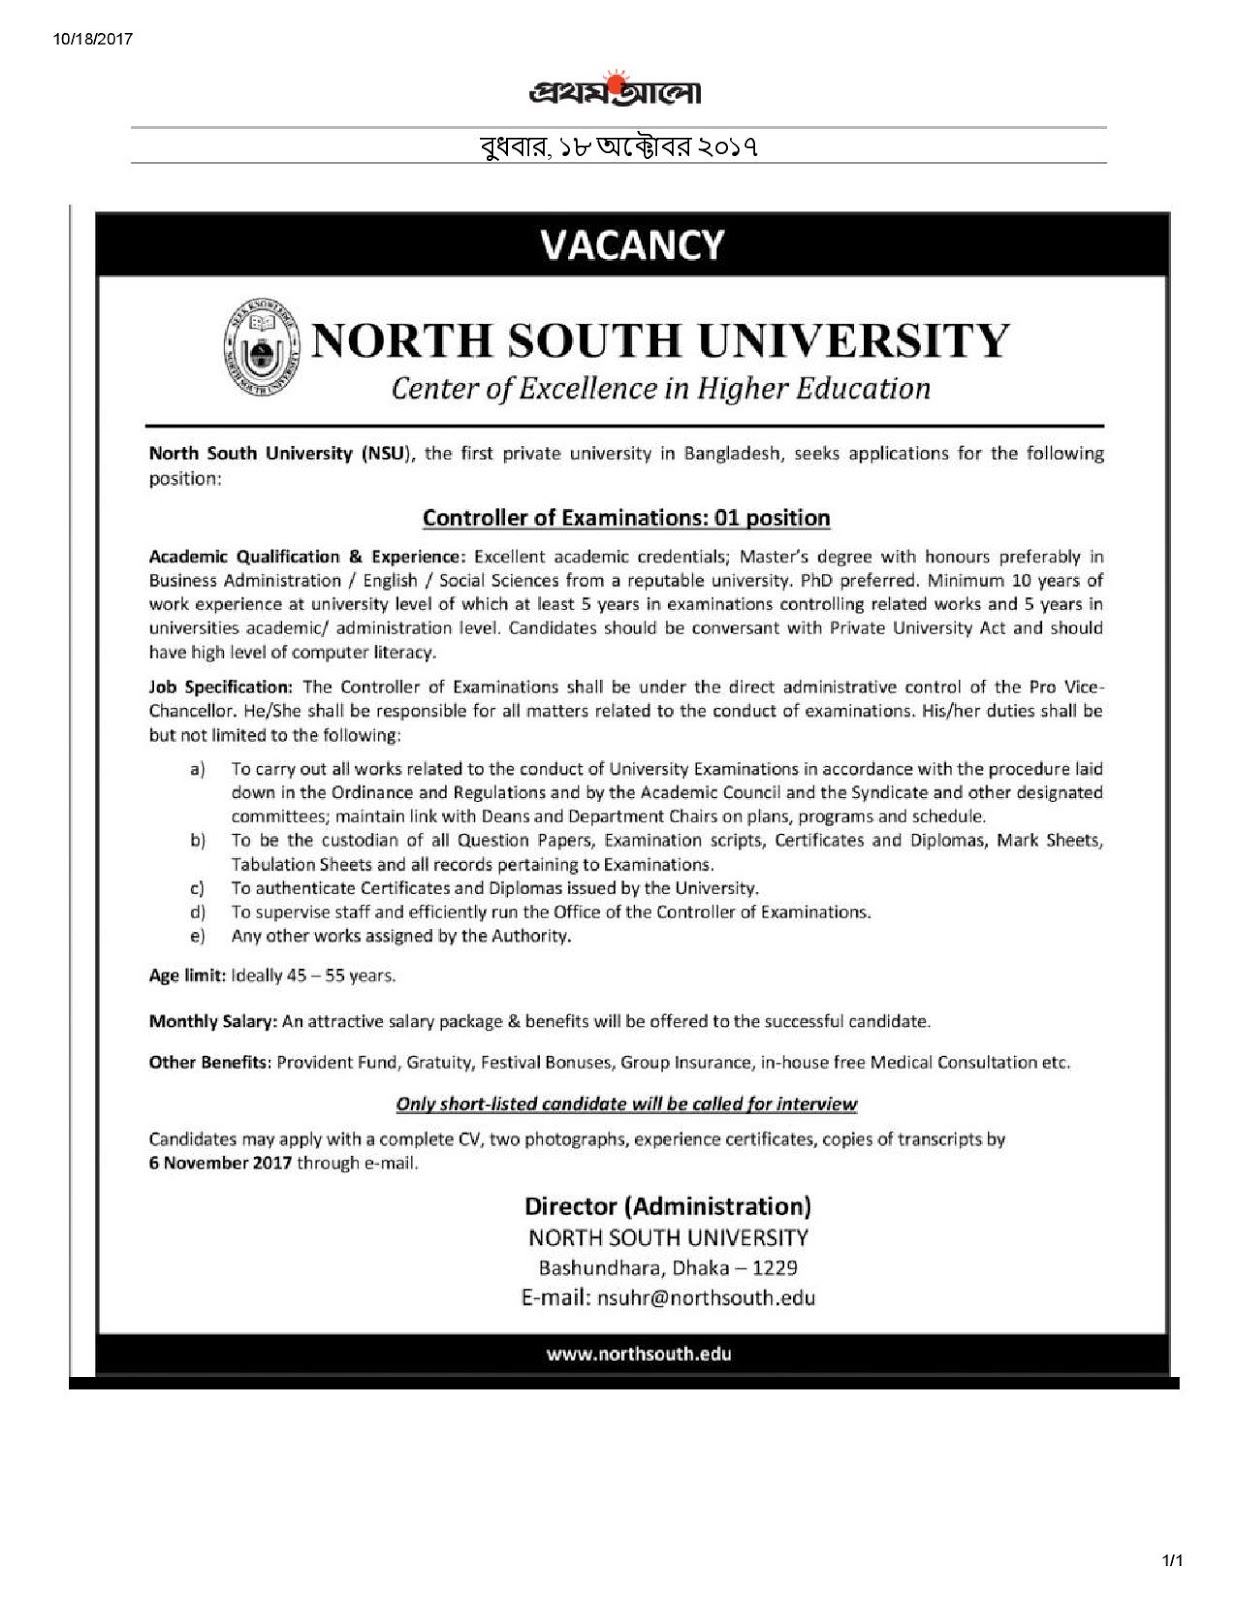 A Brief Description Of North South University